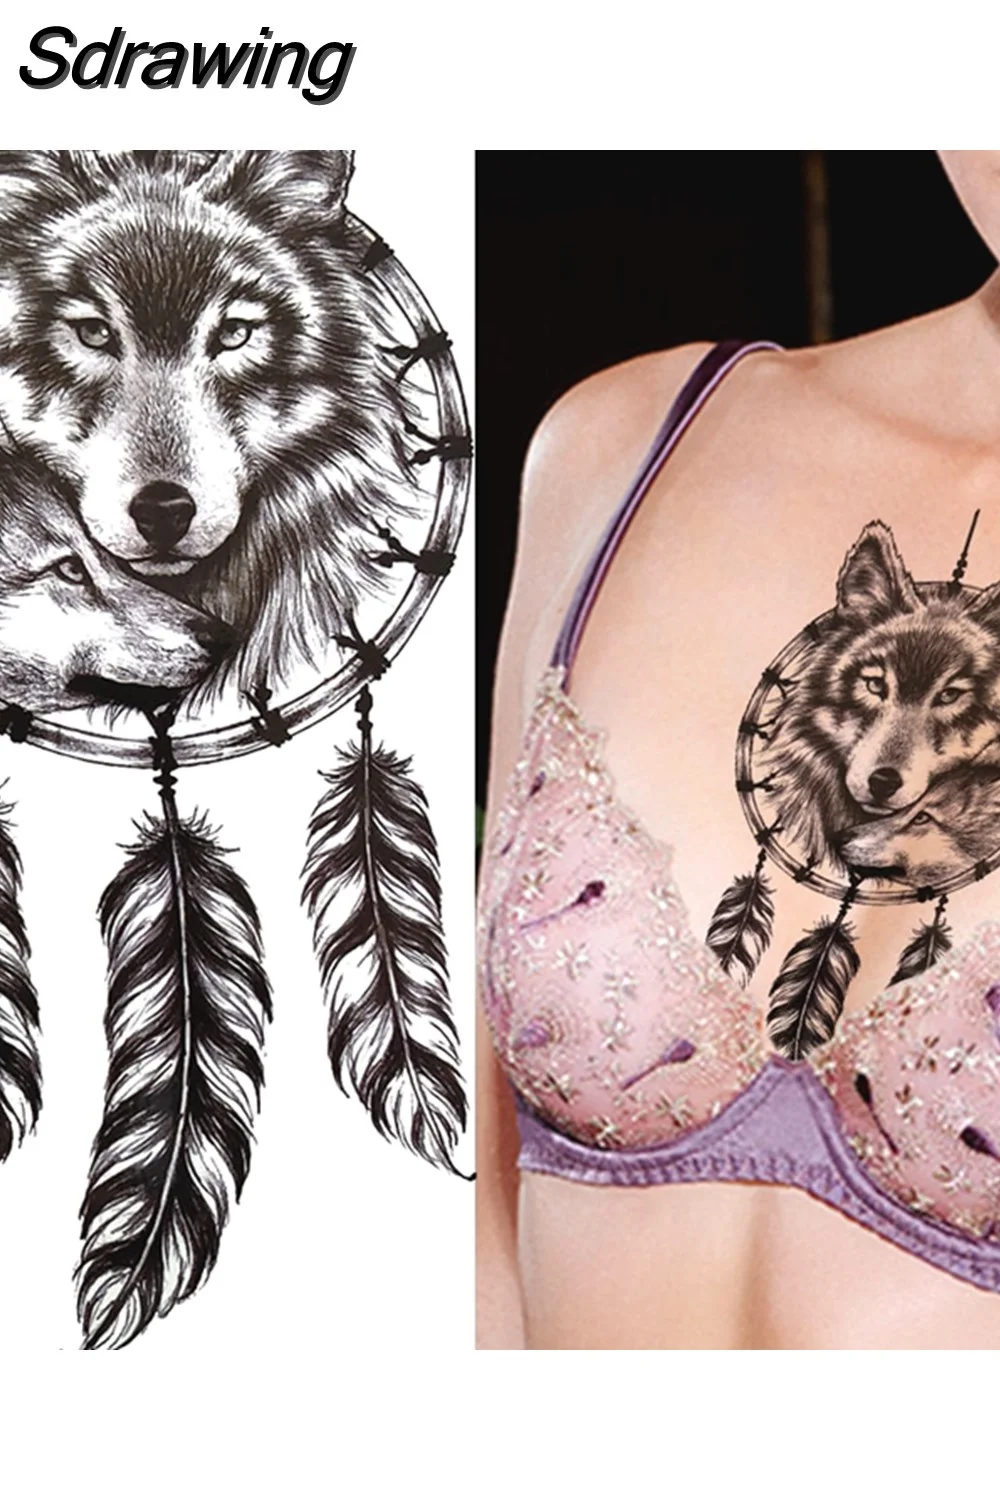 Sdrawing Forest Tattoo Sticker For Men Women Children Tiger Wolf Death Skull Temporary Tattoo Fake Henna Skeleton King Animal Tatoo 507-1